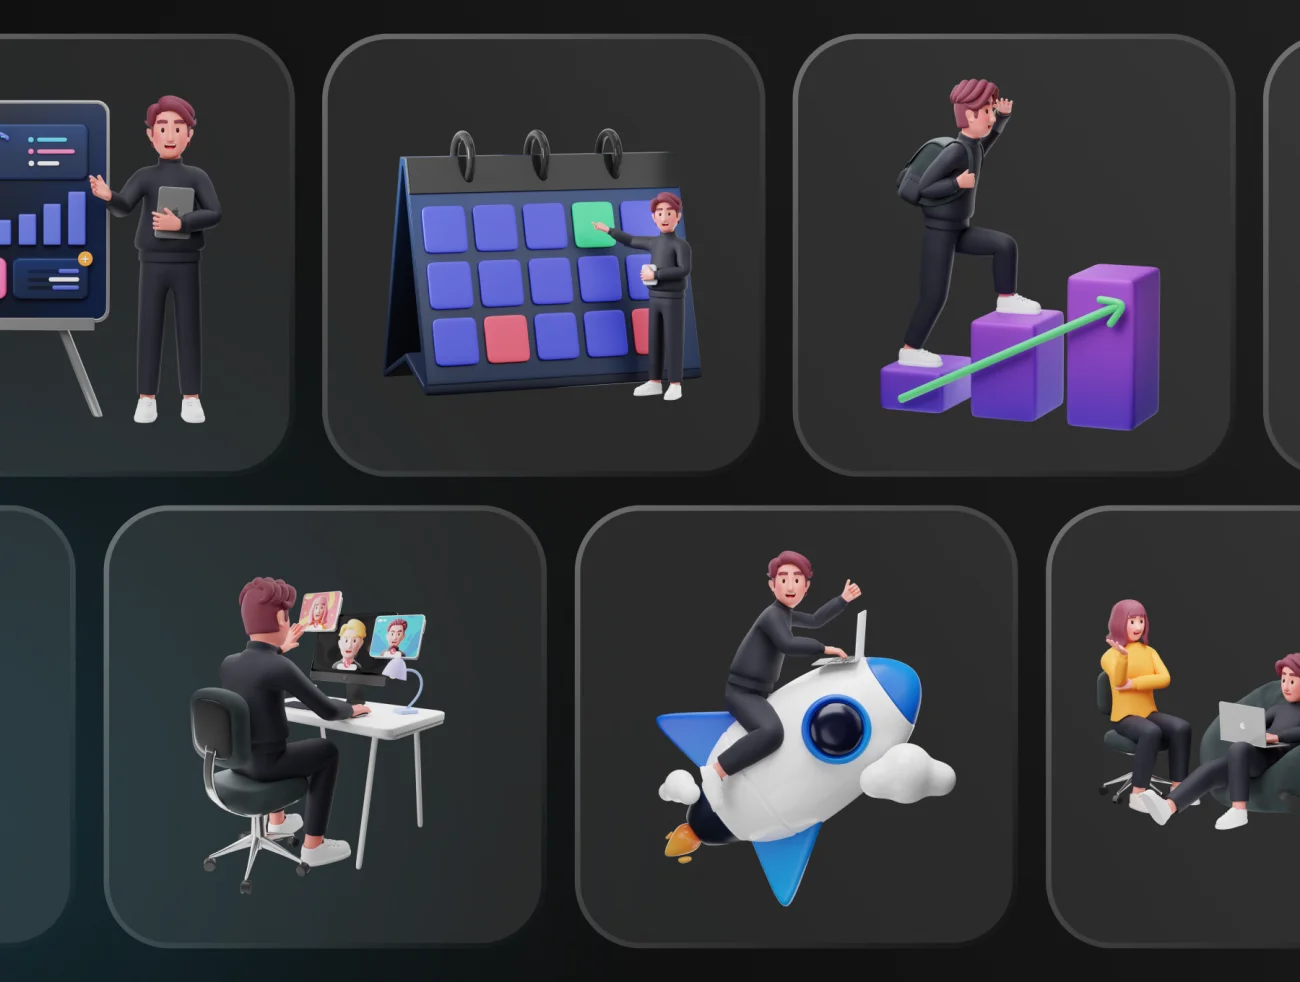 初创团队公司办公3D模型角色图标10款 Workly - Startup & Work Environment 3D Character .blender .figma-3D/图标-到位啦UI